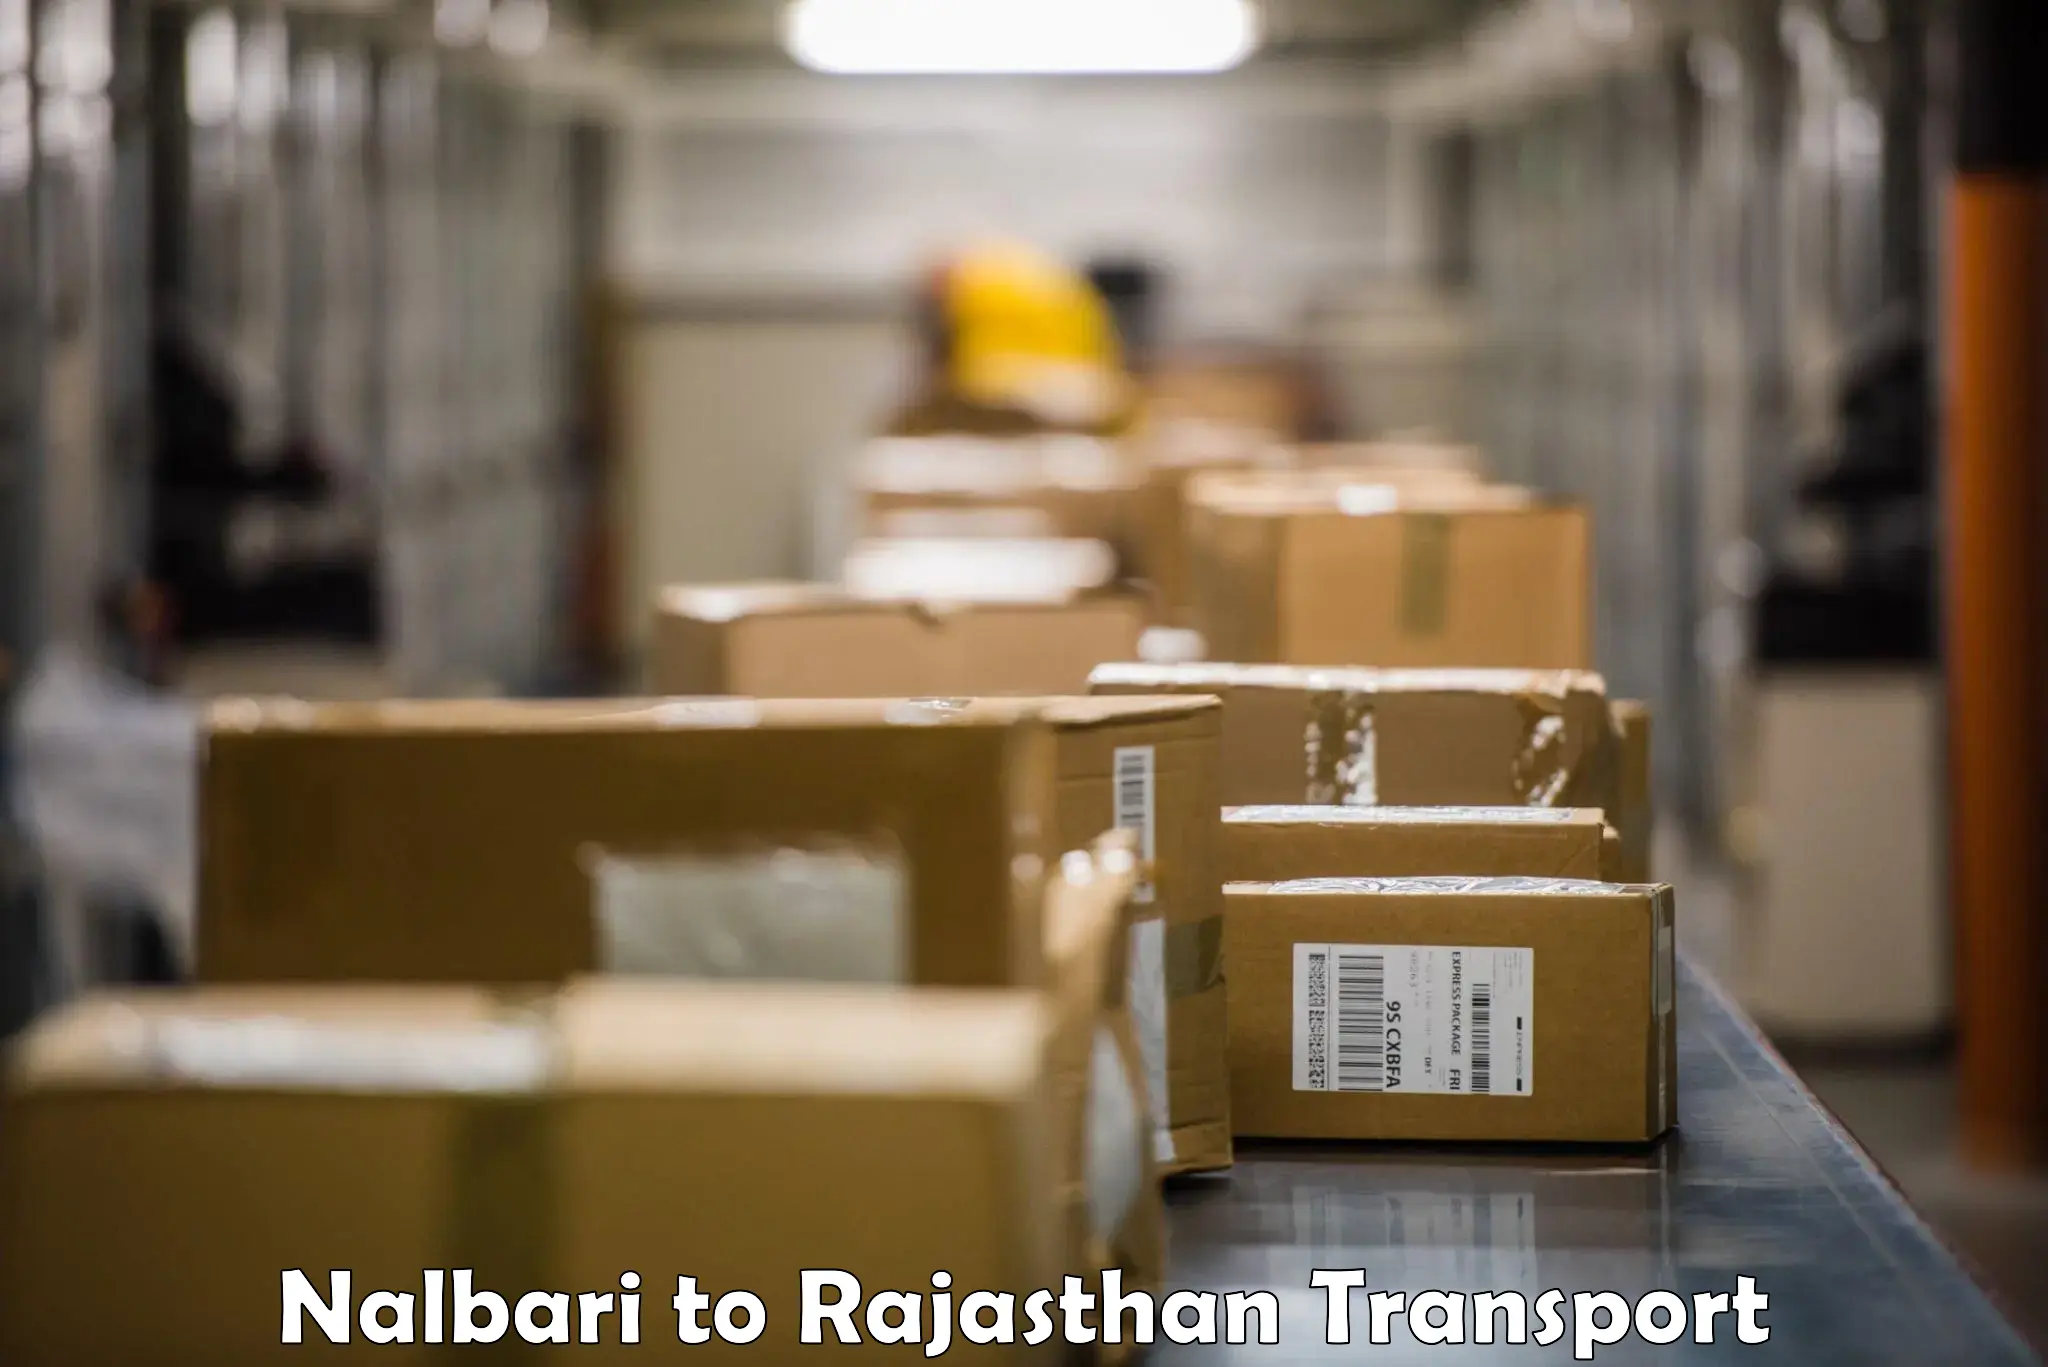 Truck transport companies in India Nalbari to Rajasthan